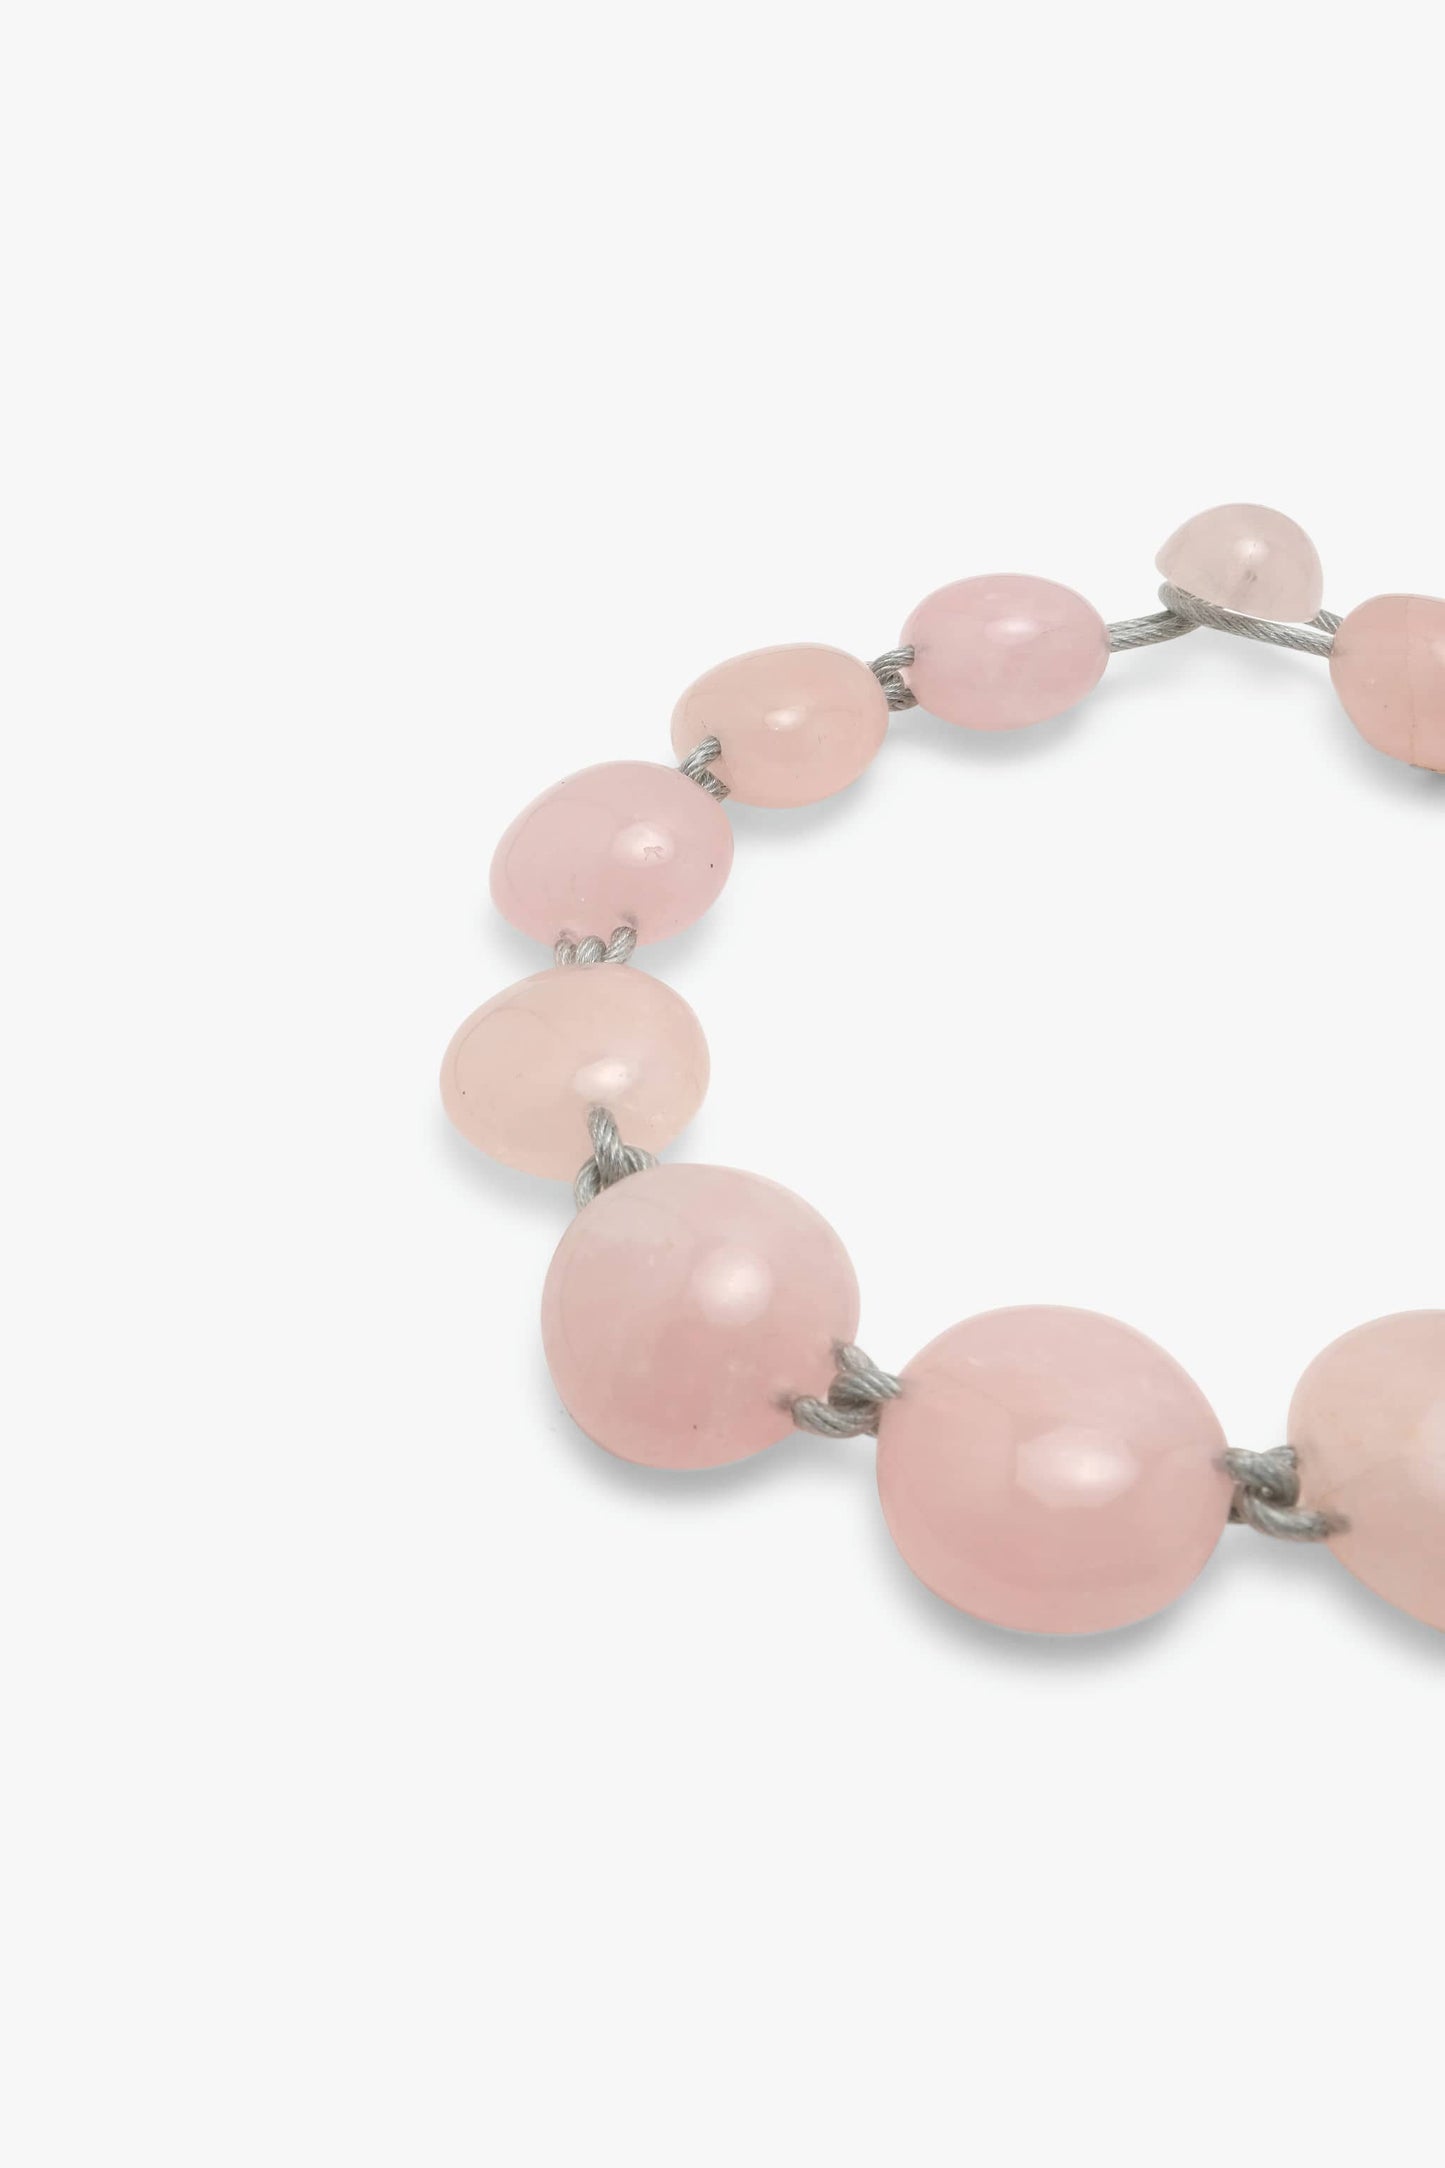 Necklace: rose quartz, wire